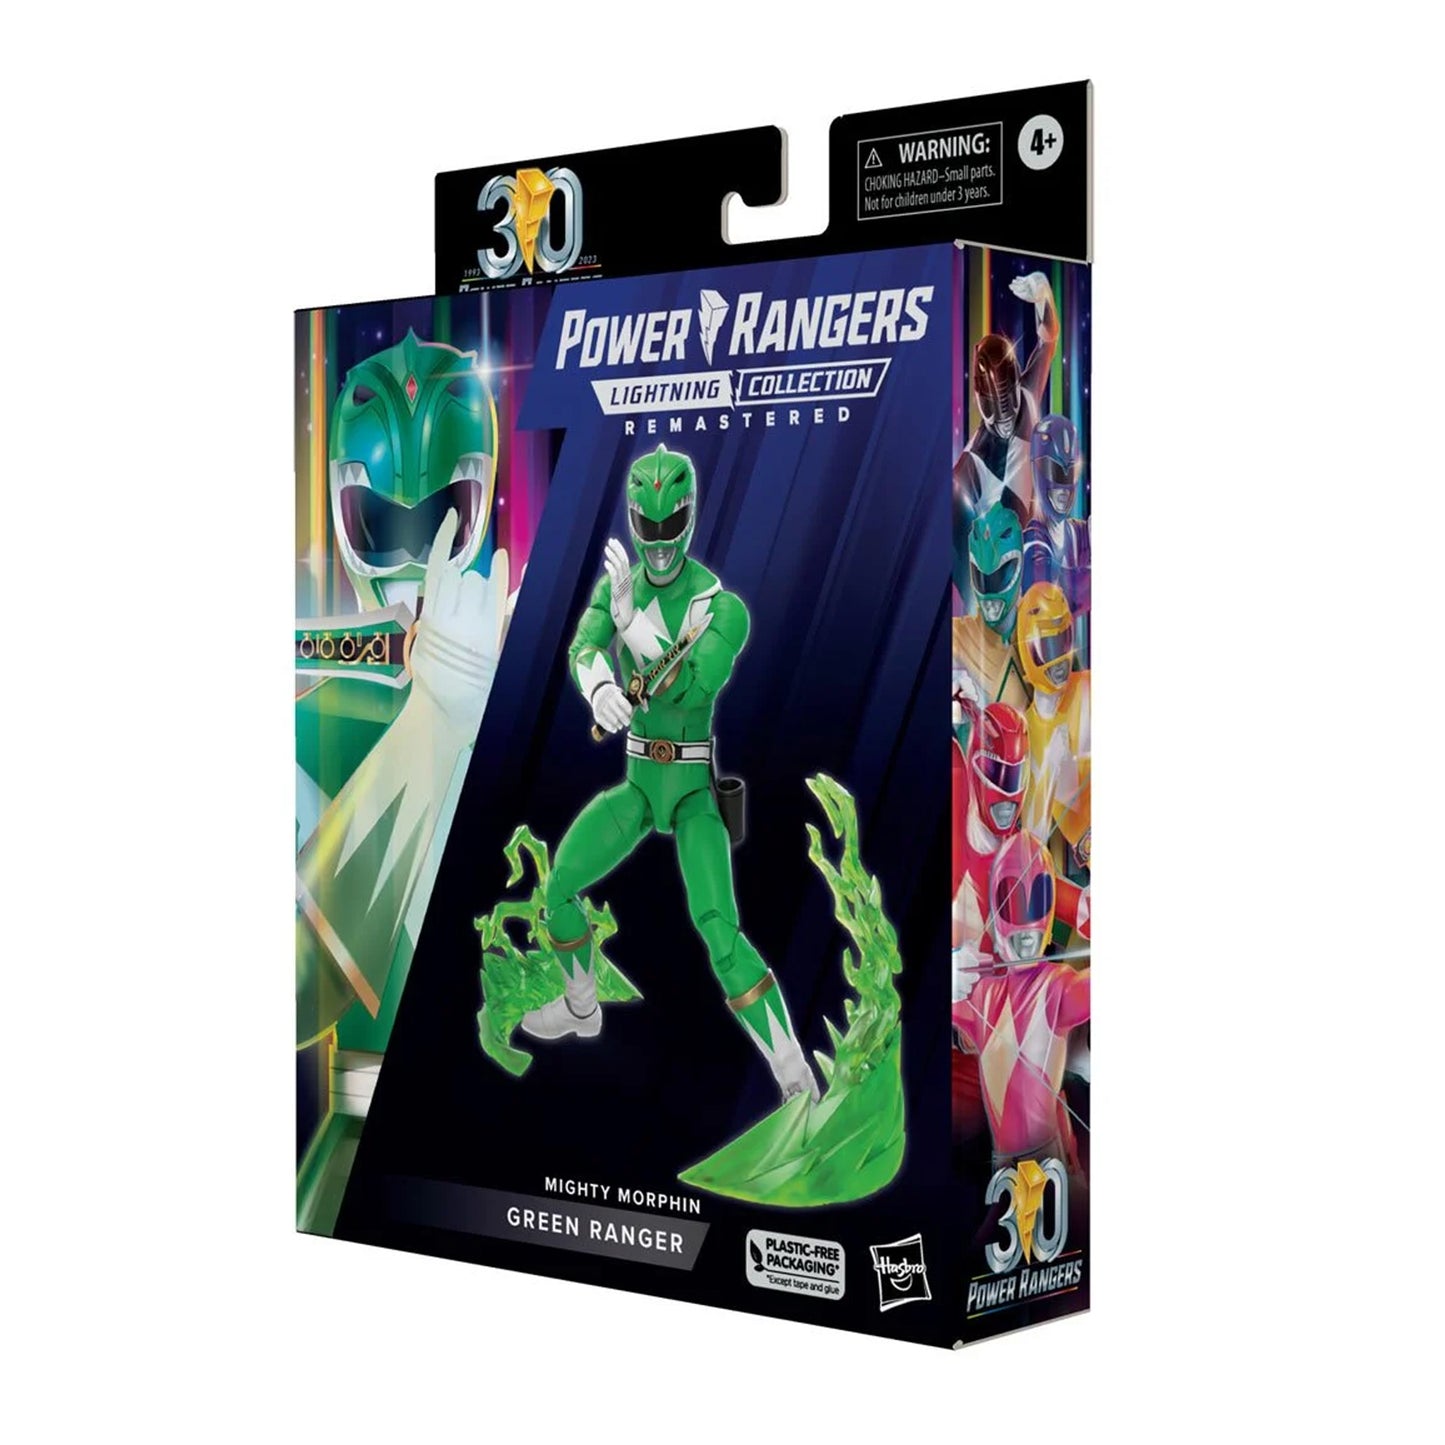 Power Rangers Lighting Collection REMASTERED Morphin Green Ranger